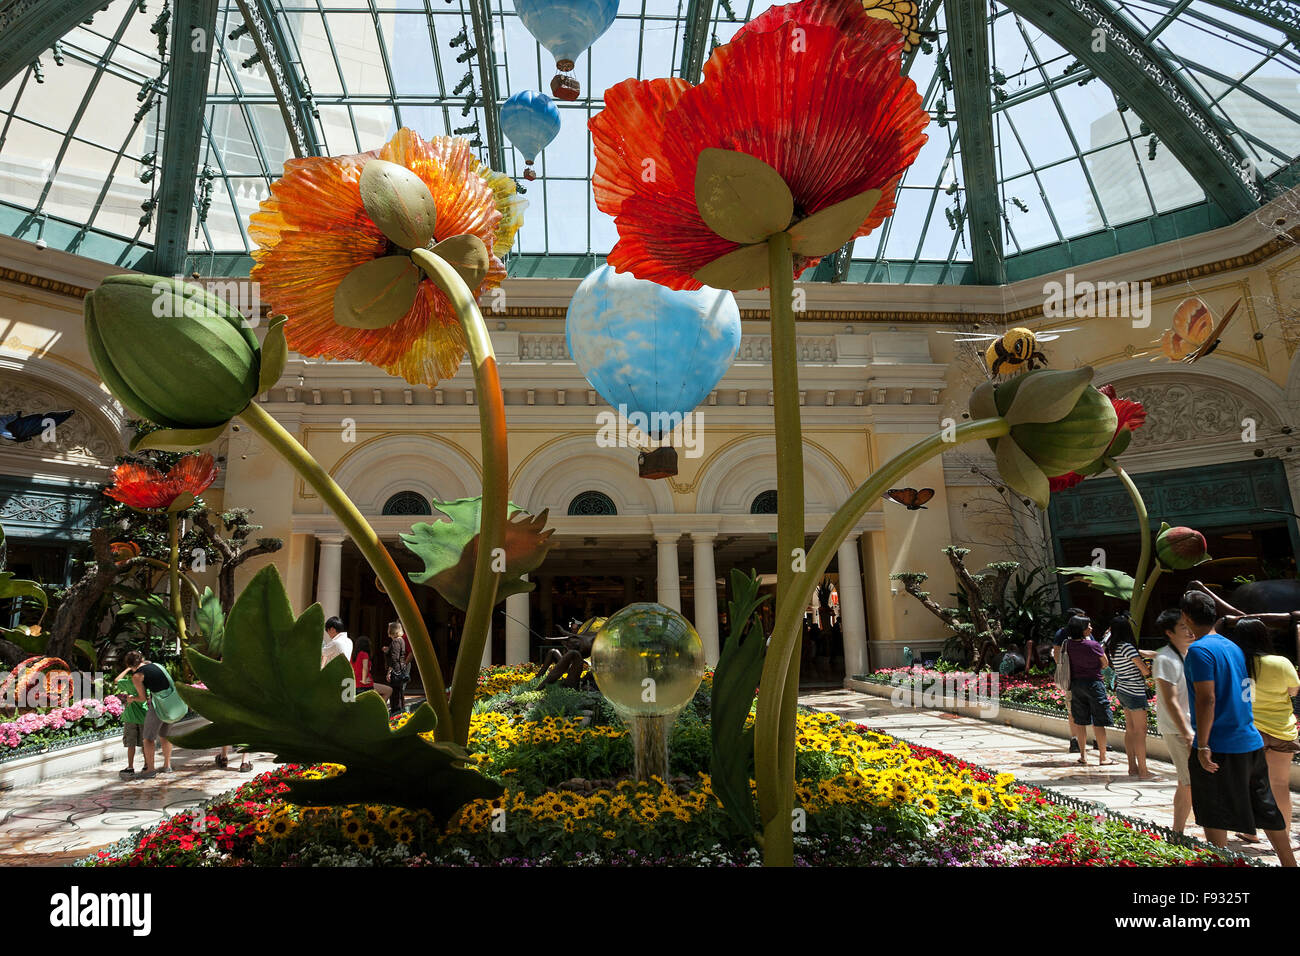 Exhibits in botanical garden conservatory, Bellagio Hotel, Las Vegas, Nevada, USA Stock Photo